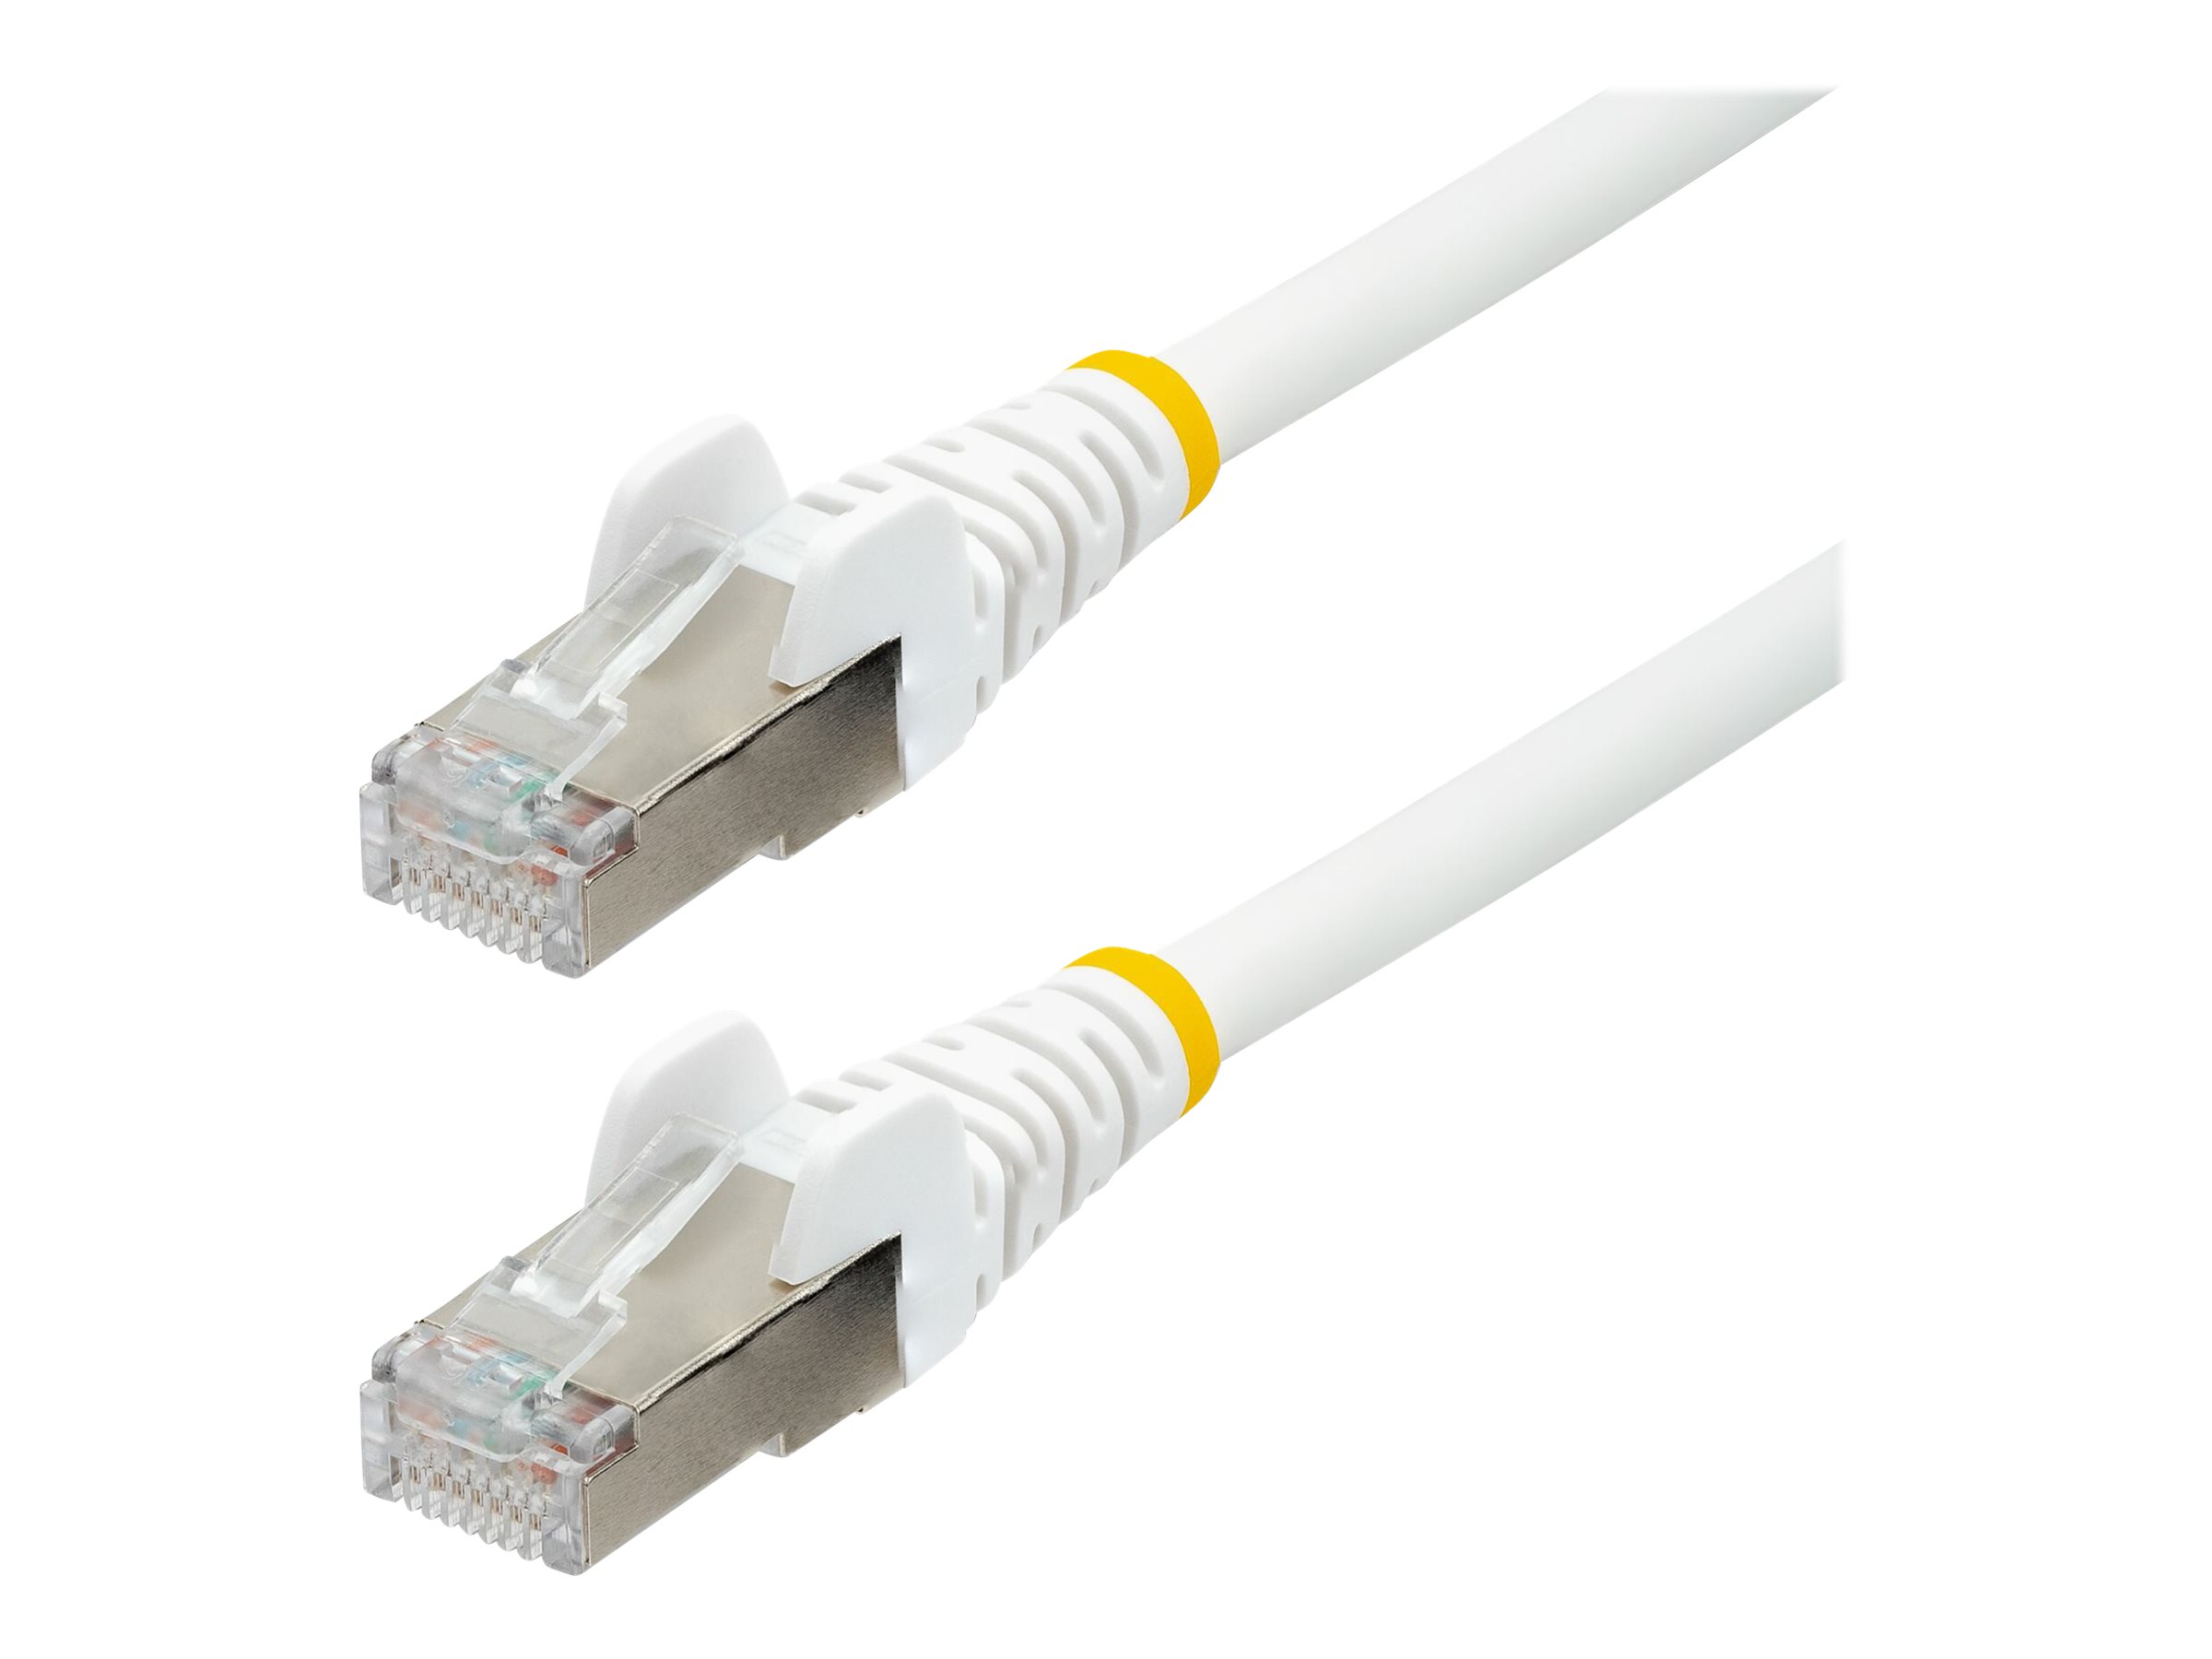 StarTech.com 1.5m CAT6a Ethernet Cable - White - Low Smoke Zero Halogen (LSZH) - 10GbE 500MHz 100W PoE++ Snagless RJ-45 w/Strain